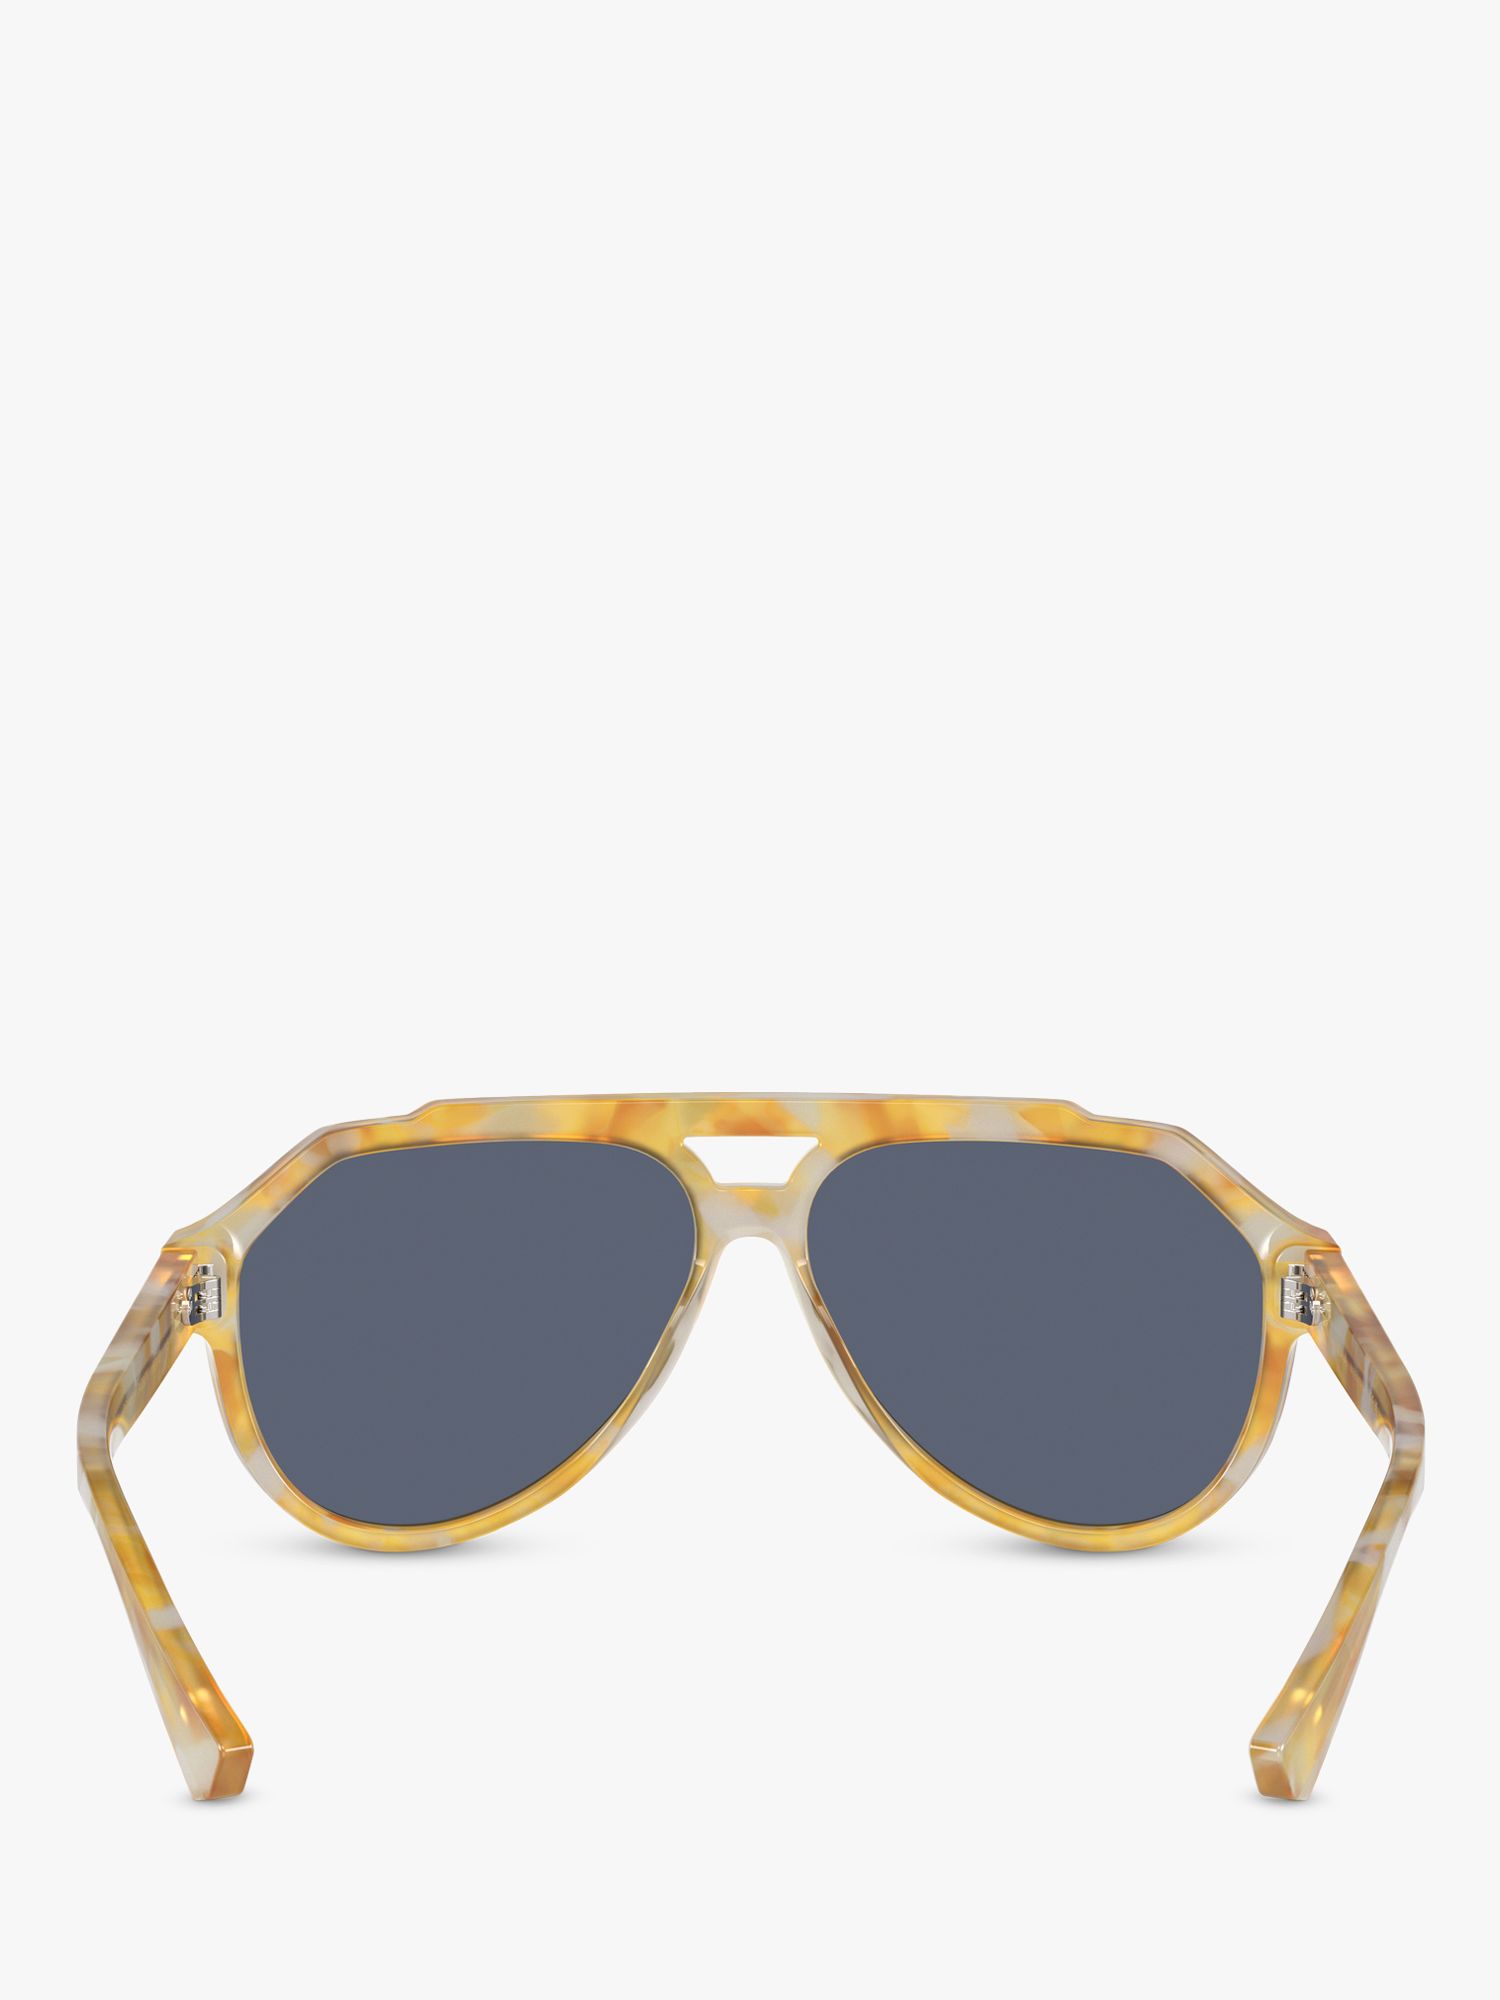 Buy Dolce & Gabbana DG4452 Men's Aviator Sunglasses, Yellow Tortoise/Blue Online at johnlewis.com